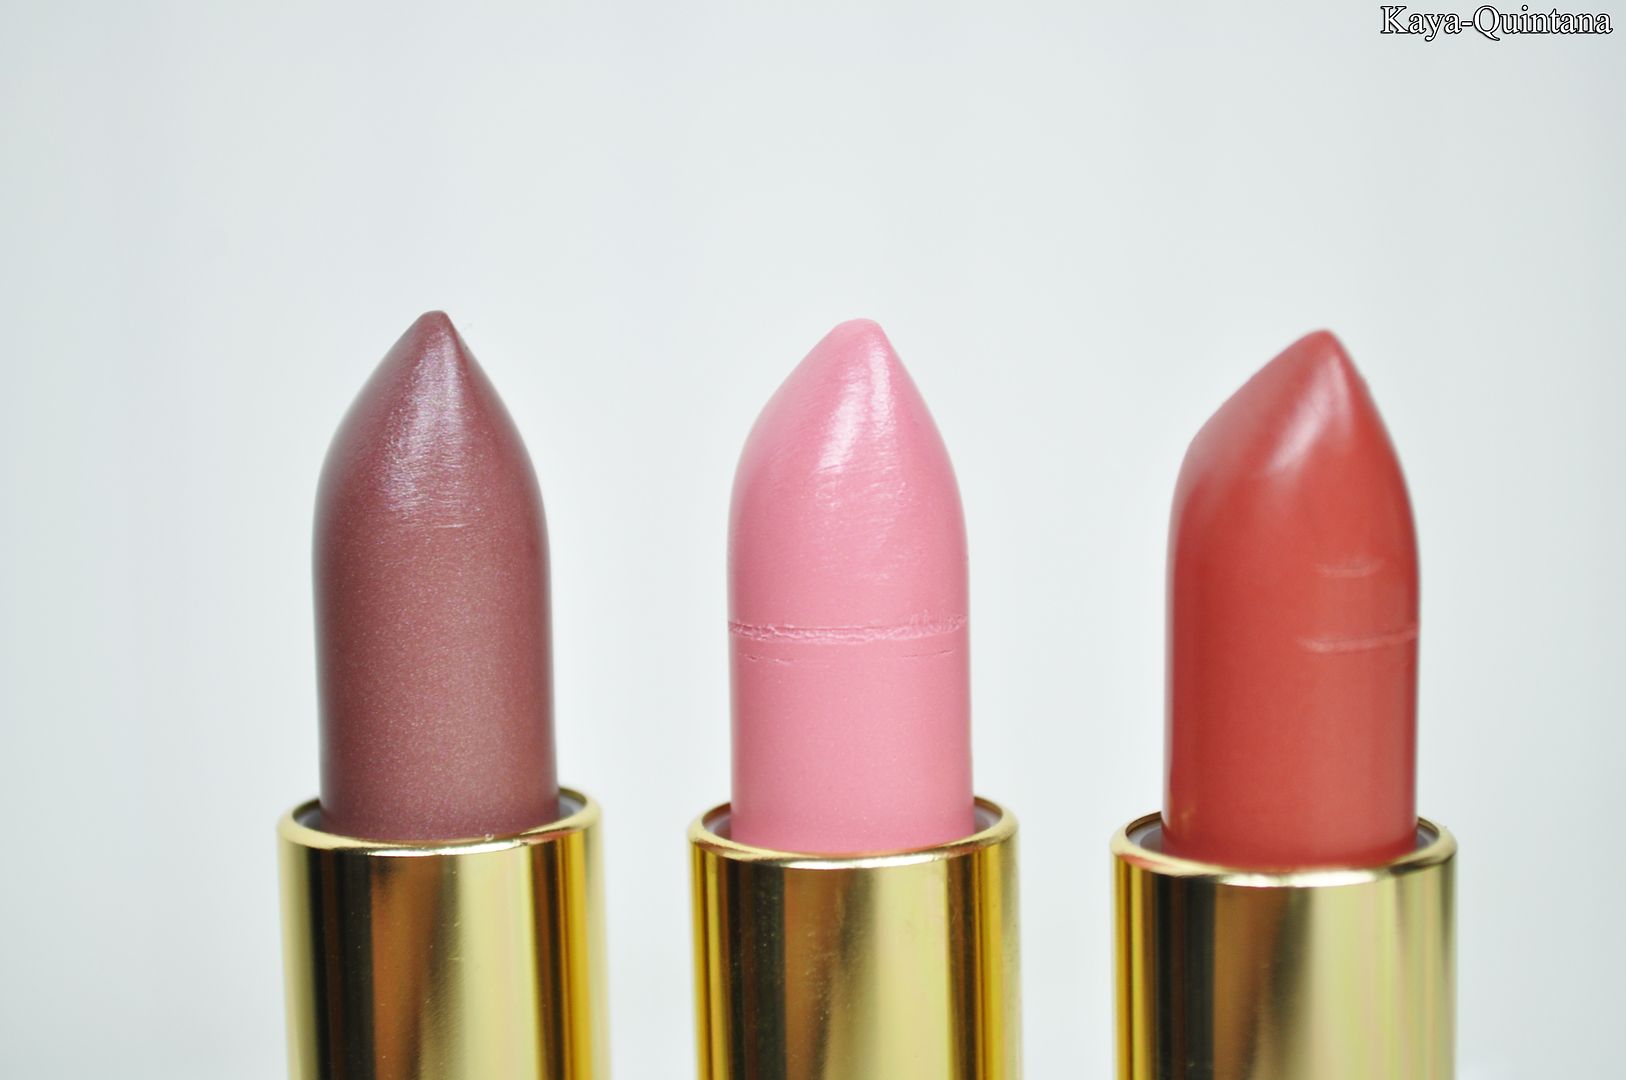 l'oreal collection privee nude lipsticks